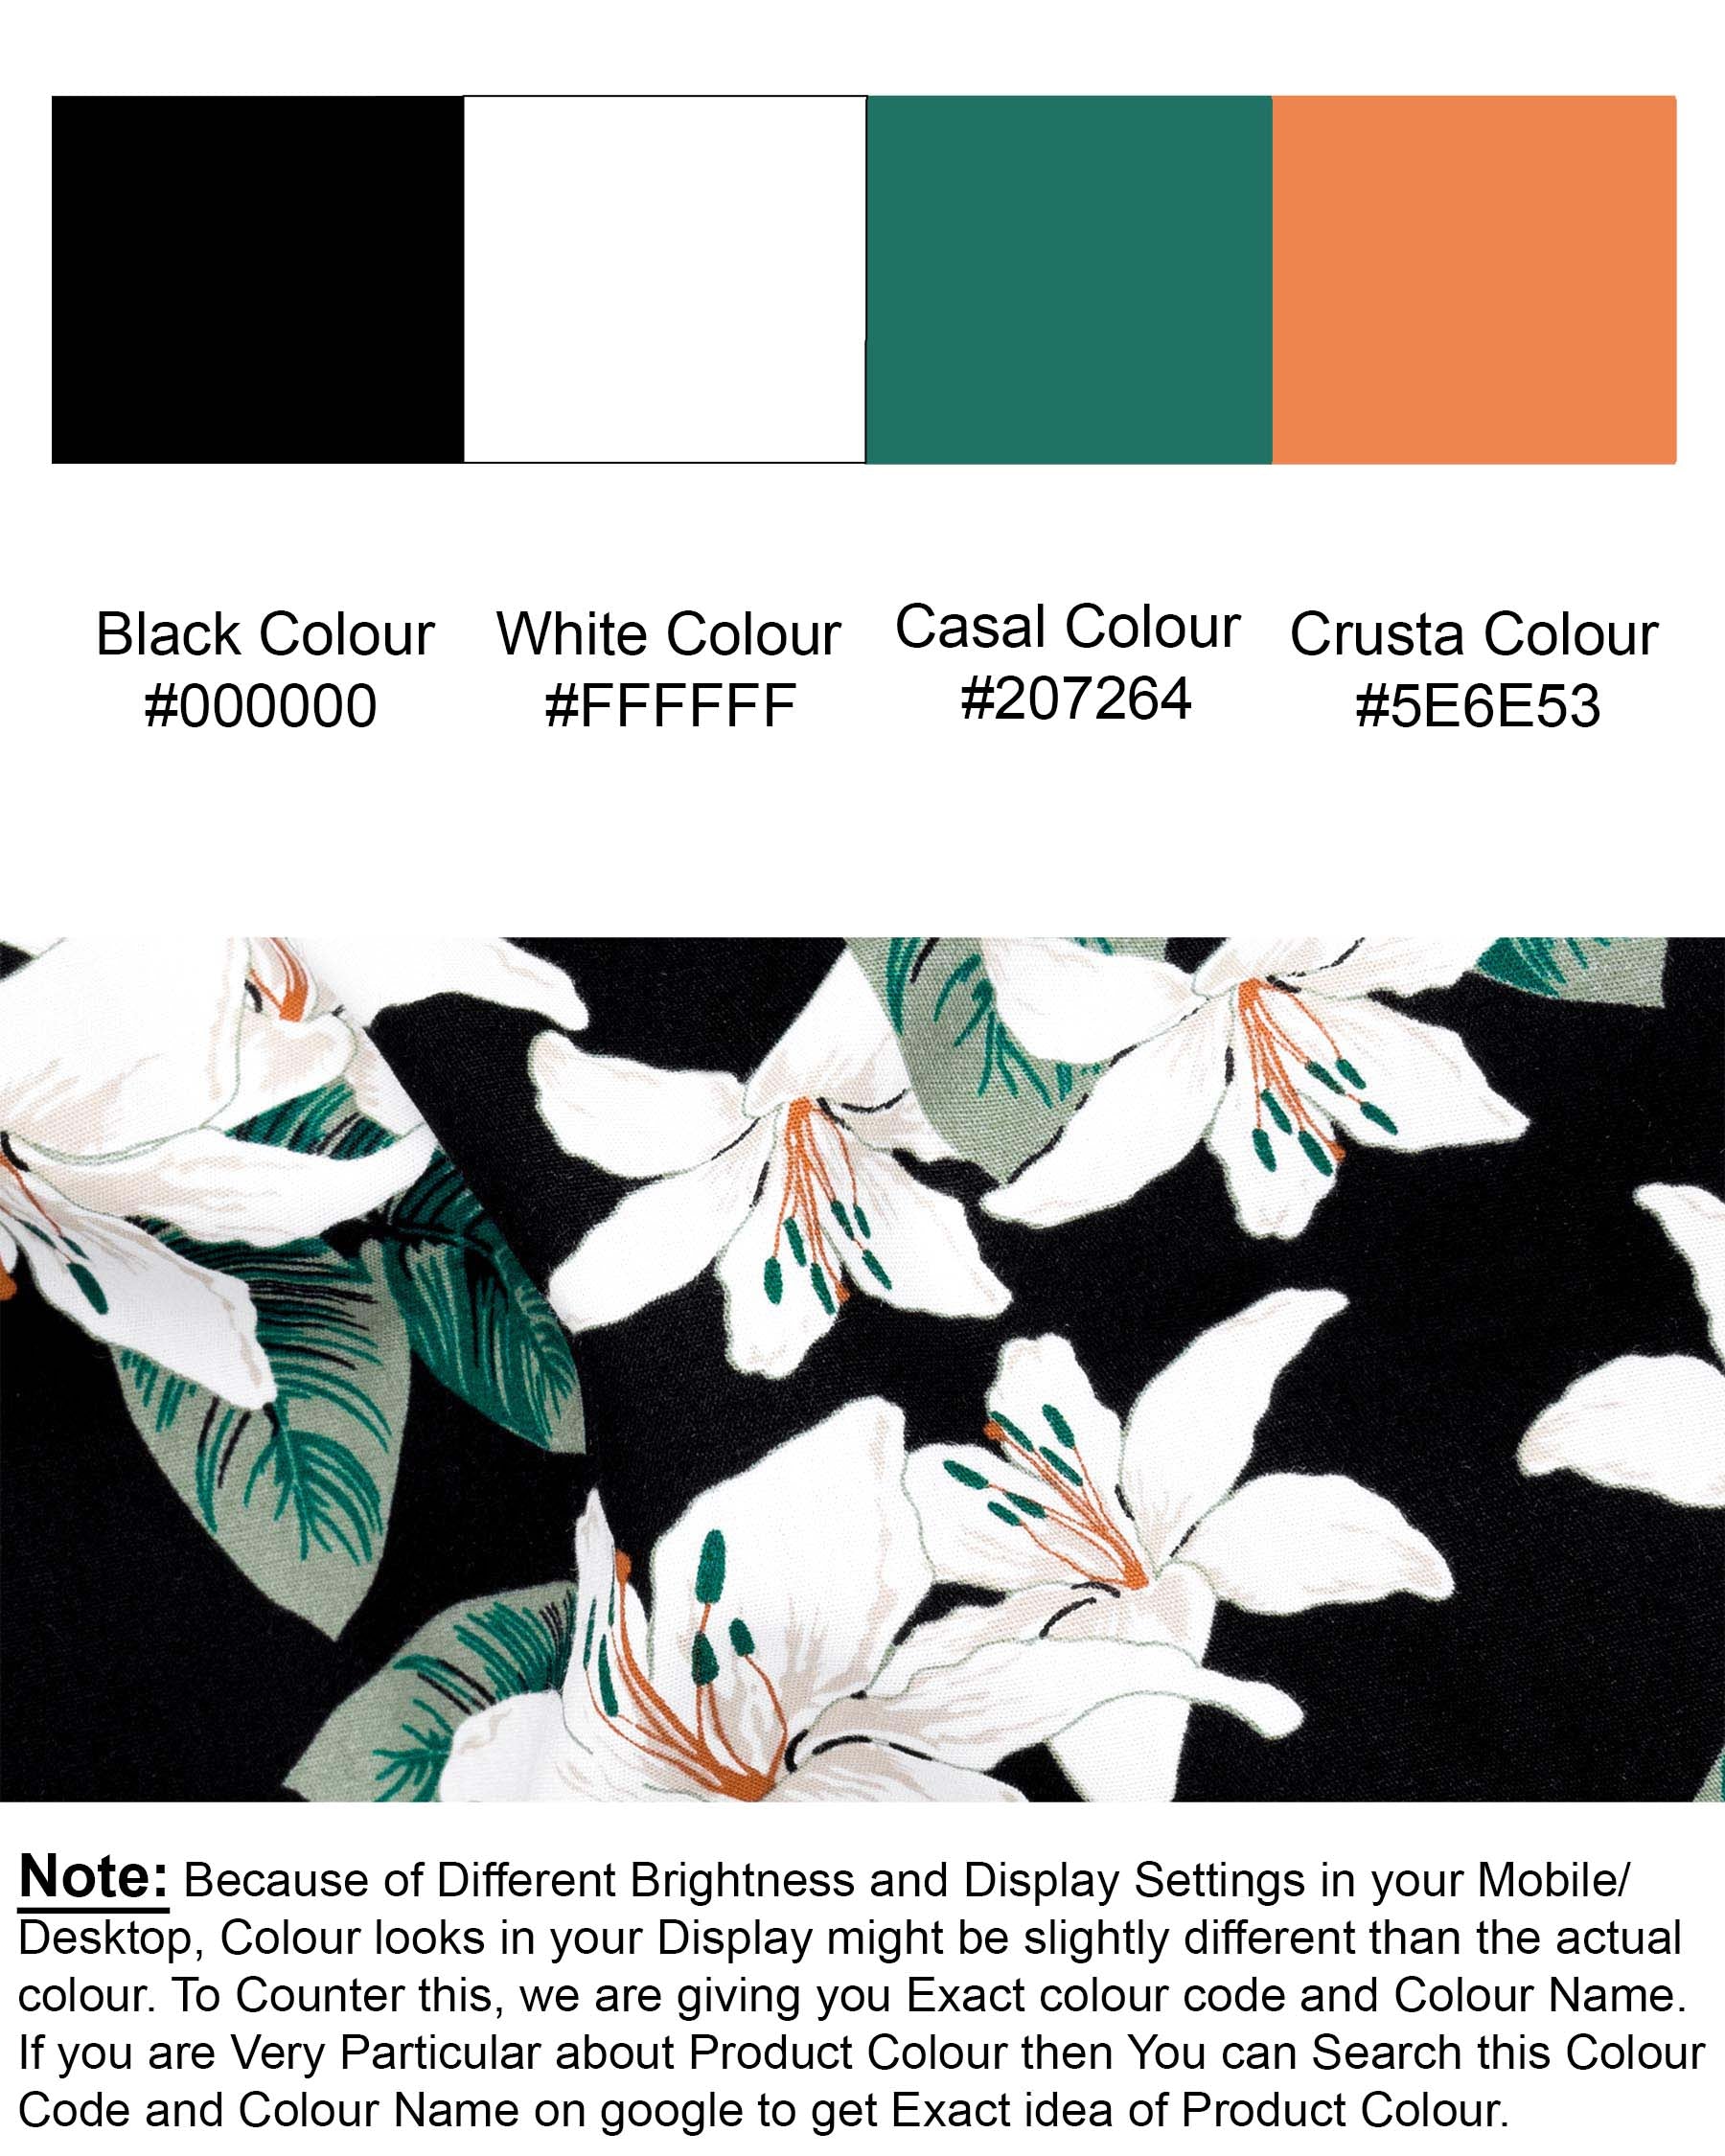 Jade Black with Multicolour Lily Printed Twill Textured Premium Cotton Kurta Shirt 6831-KS-38,6831-KS-38,6831-KS-39,6831-KS-39,6831-KS-40,6831-KS-40,6831-KS-42,6831-KS-42,6831-KS-44,6831-KS-44,6831-KS-46,6831-KS-46,6831-KS-48,6831-KS-48,6831-KS-50,6831-KS-50,6831-KS-52,6831-KS-52